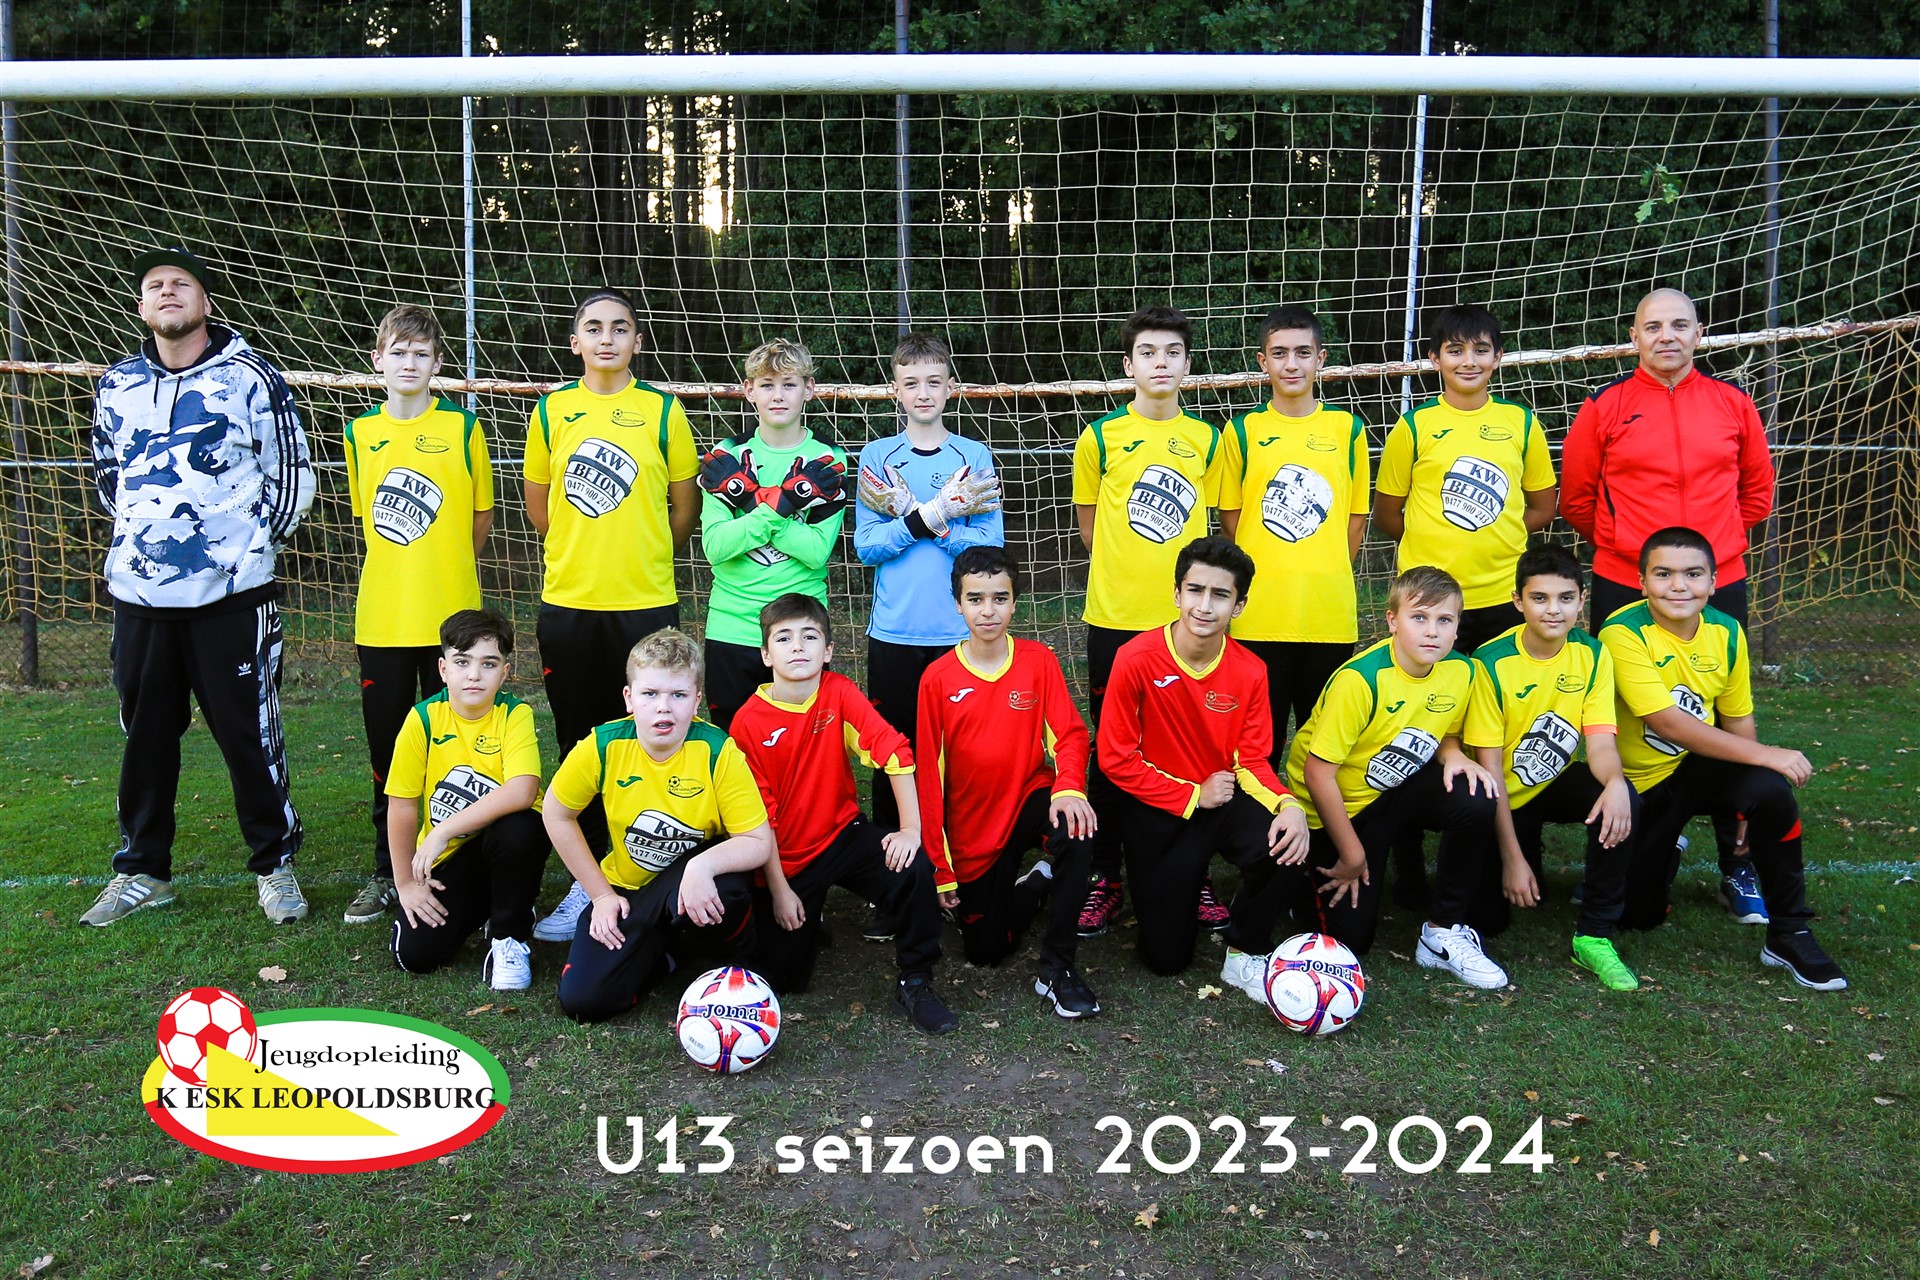 U13 ploegfoto jeugdopleiding voetbalclub K.ESK Leopoldsburg